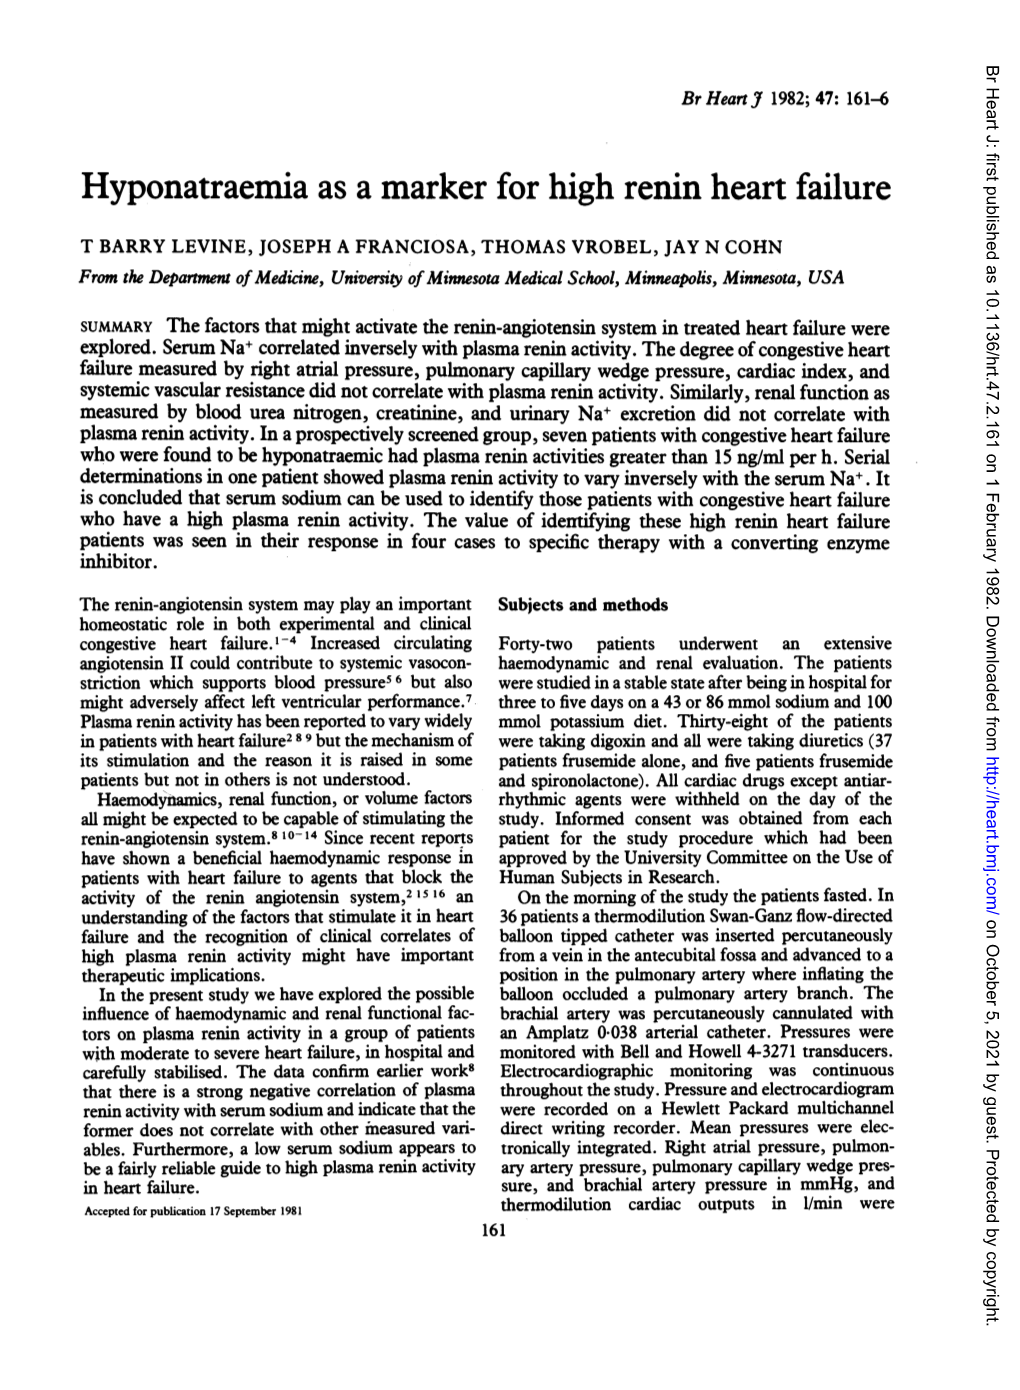 Hyponatraemia As a Marker for High Renin Heart Failure